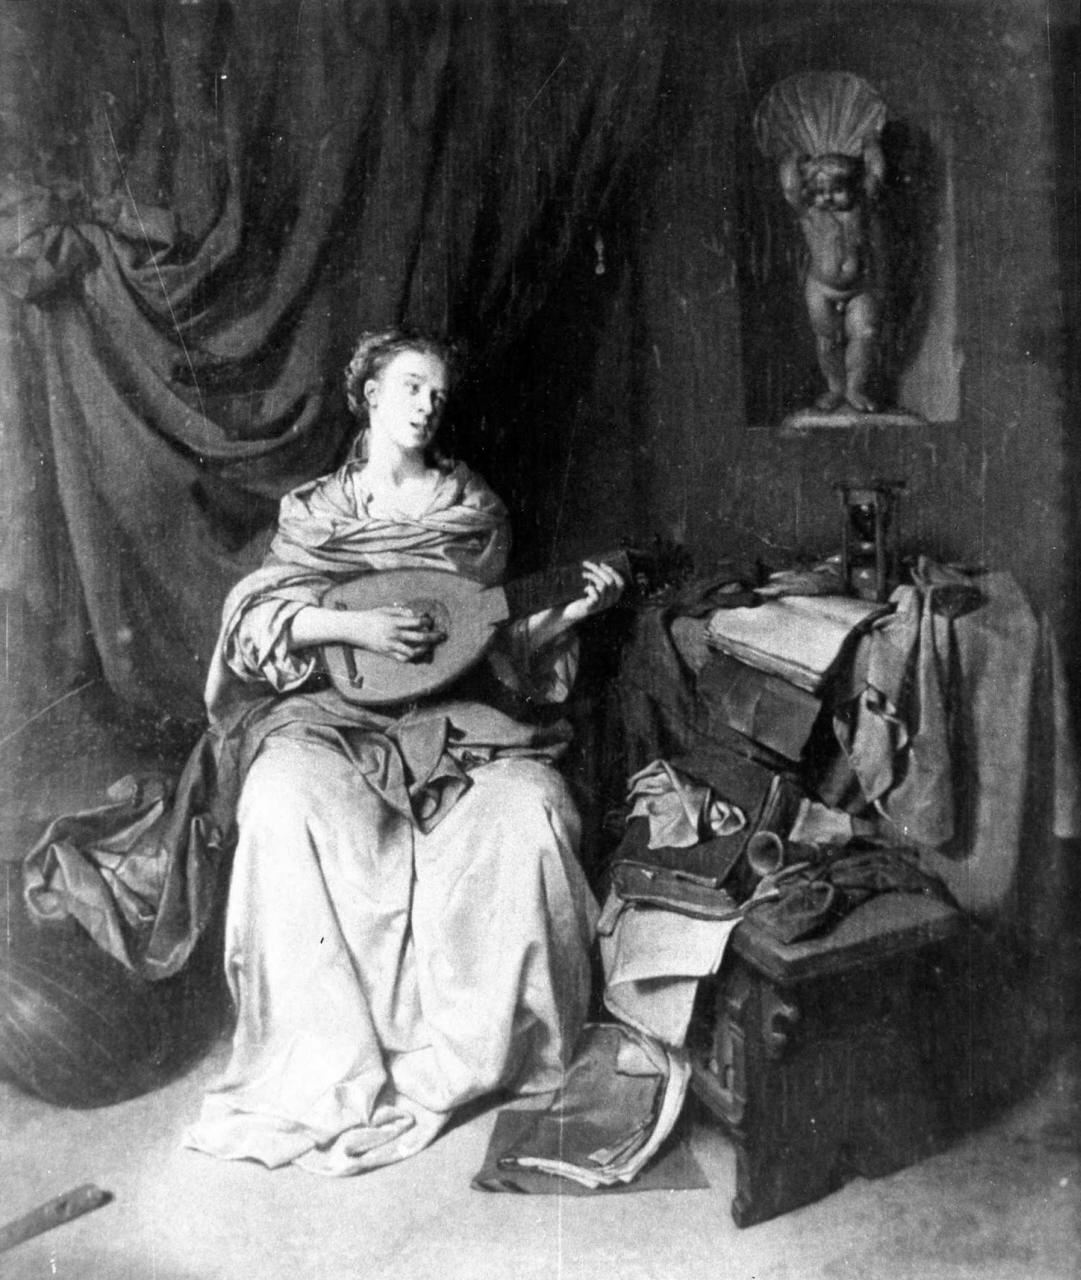 suonatrice di liuto (dipinto, pendant) di Bega Cornelis Pietersz (sec. XVII)